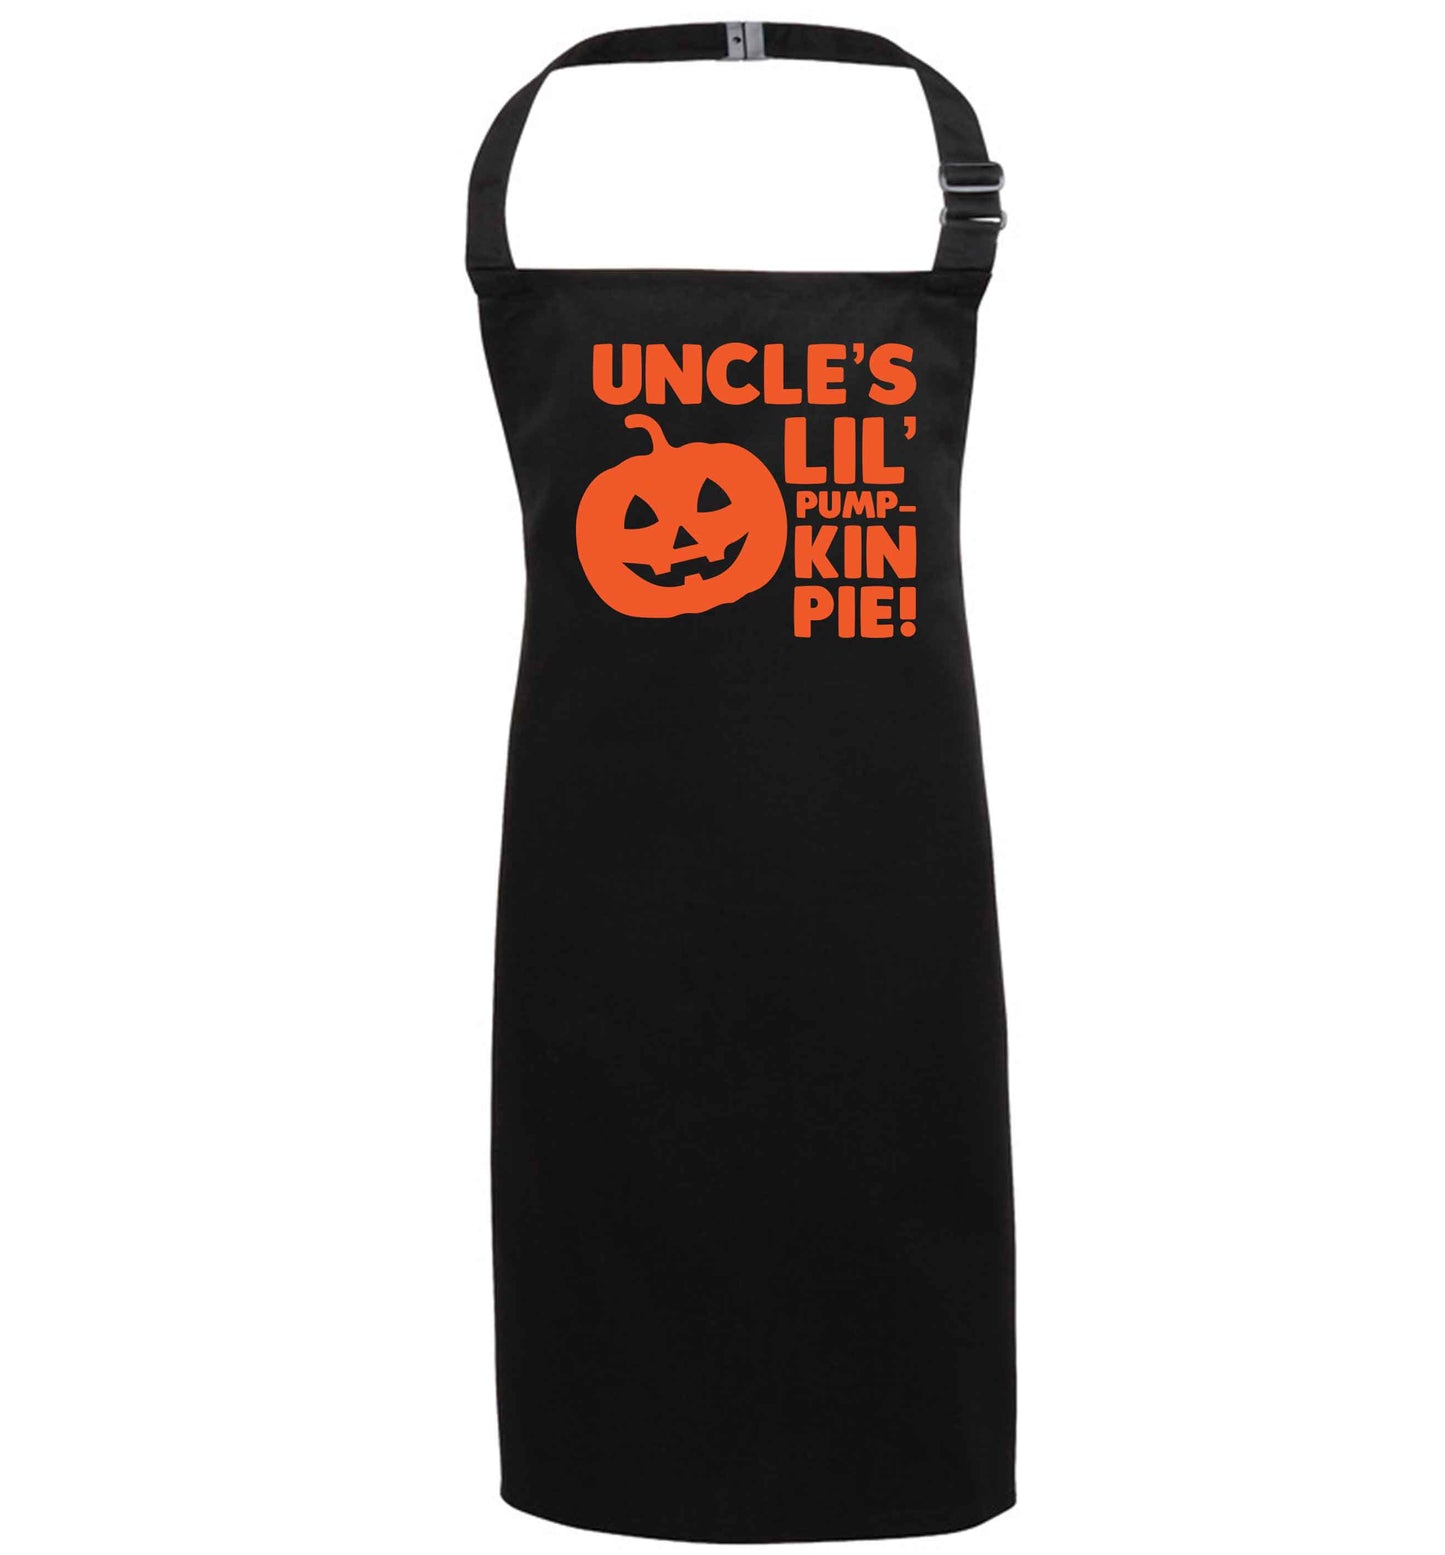 Uncle's lil' pumpkin pie black apron 7-10 years